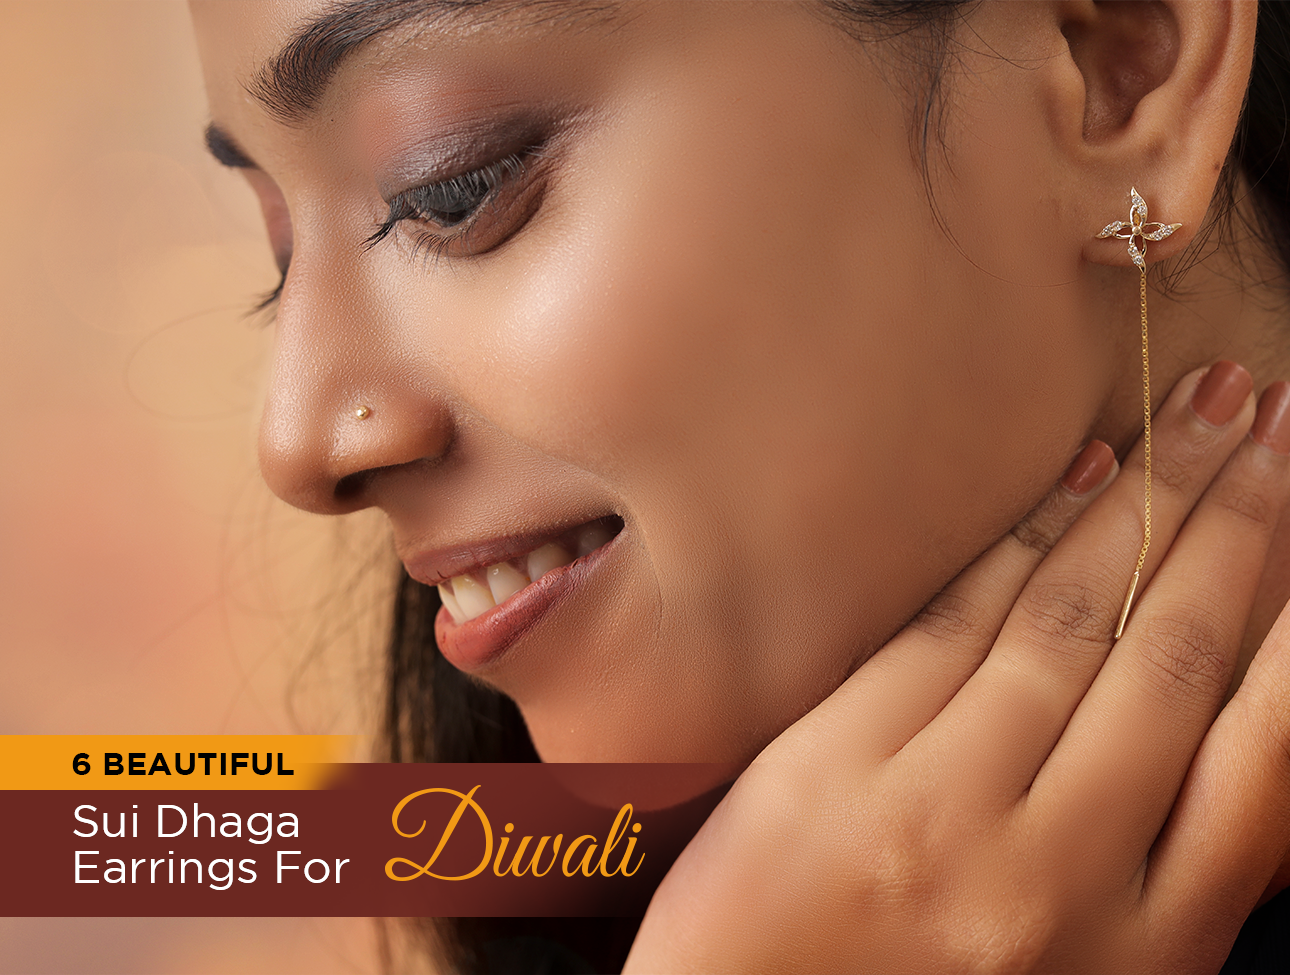 6 Beautiful Sui Dhaga Earrings For Diwali